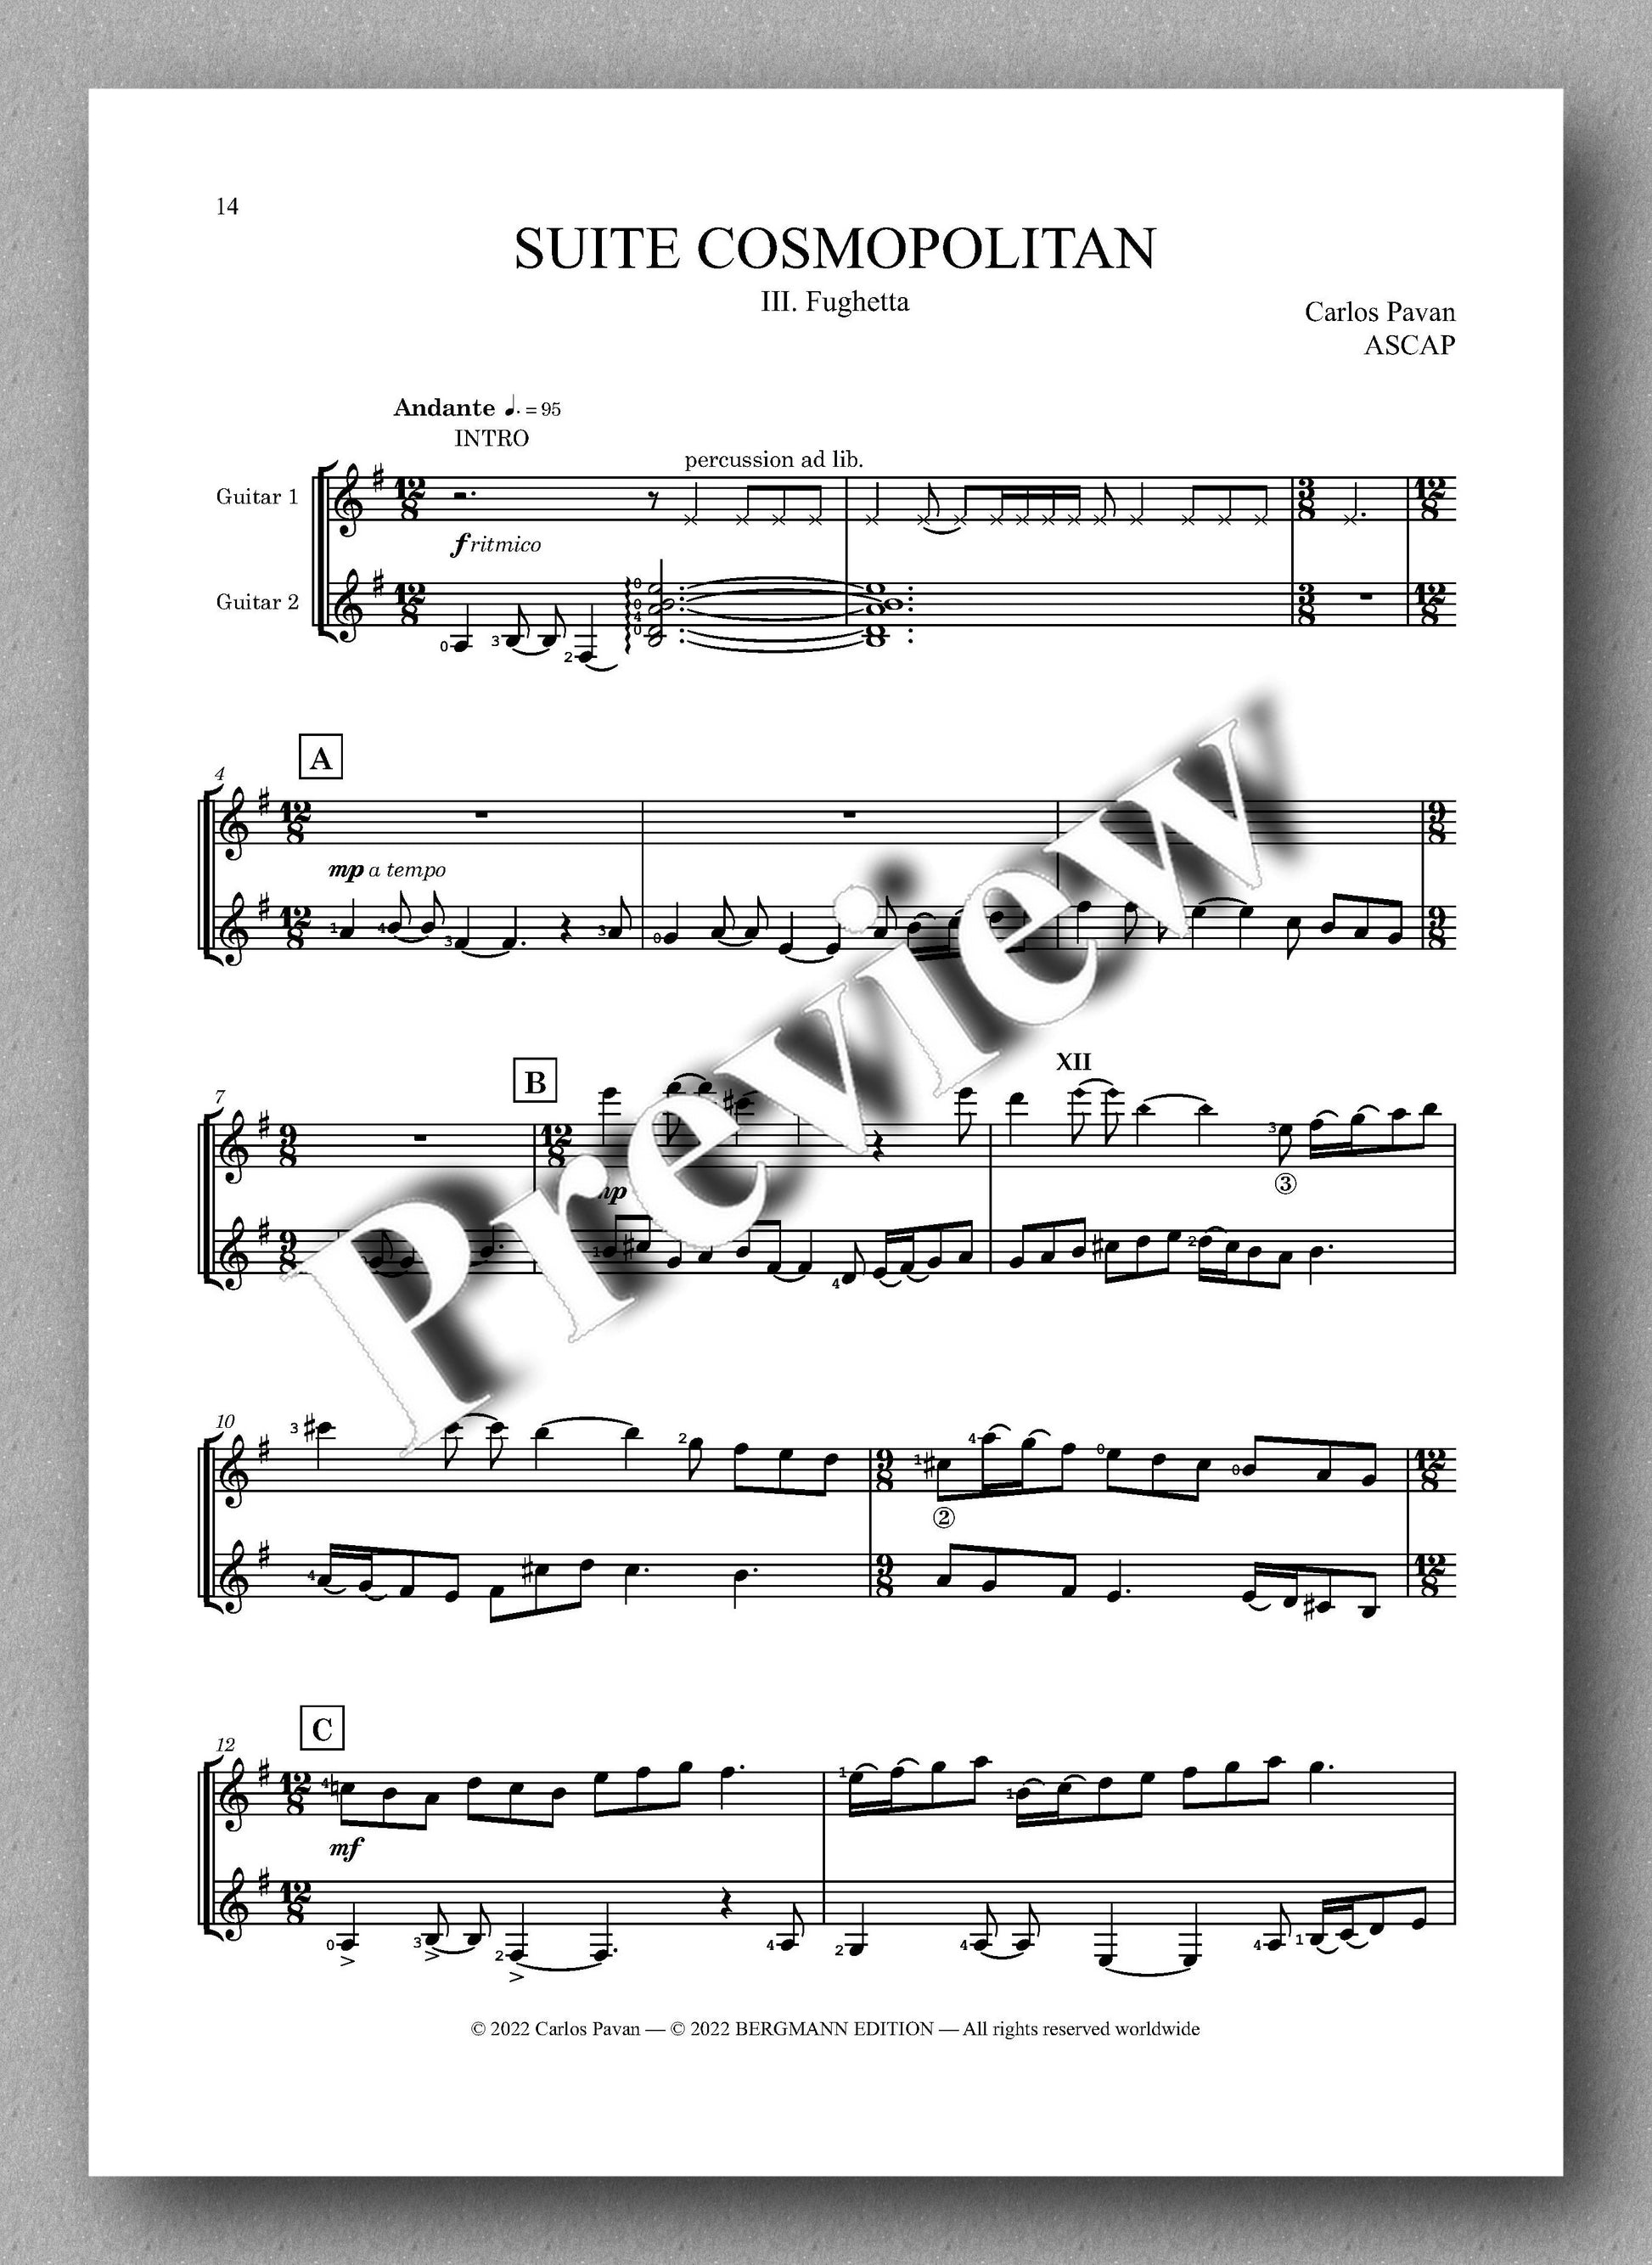 Carlos Pavan, Suite Cosmopolitan - music score 3